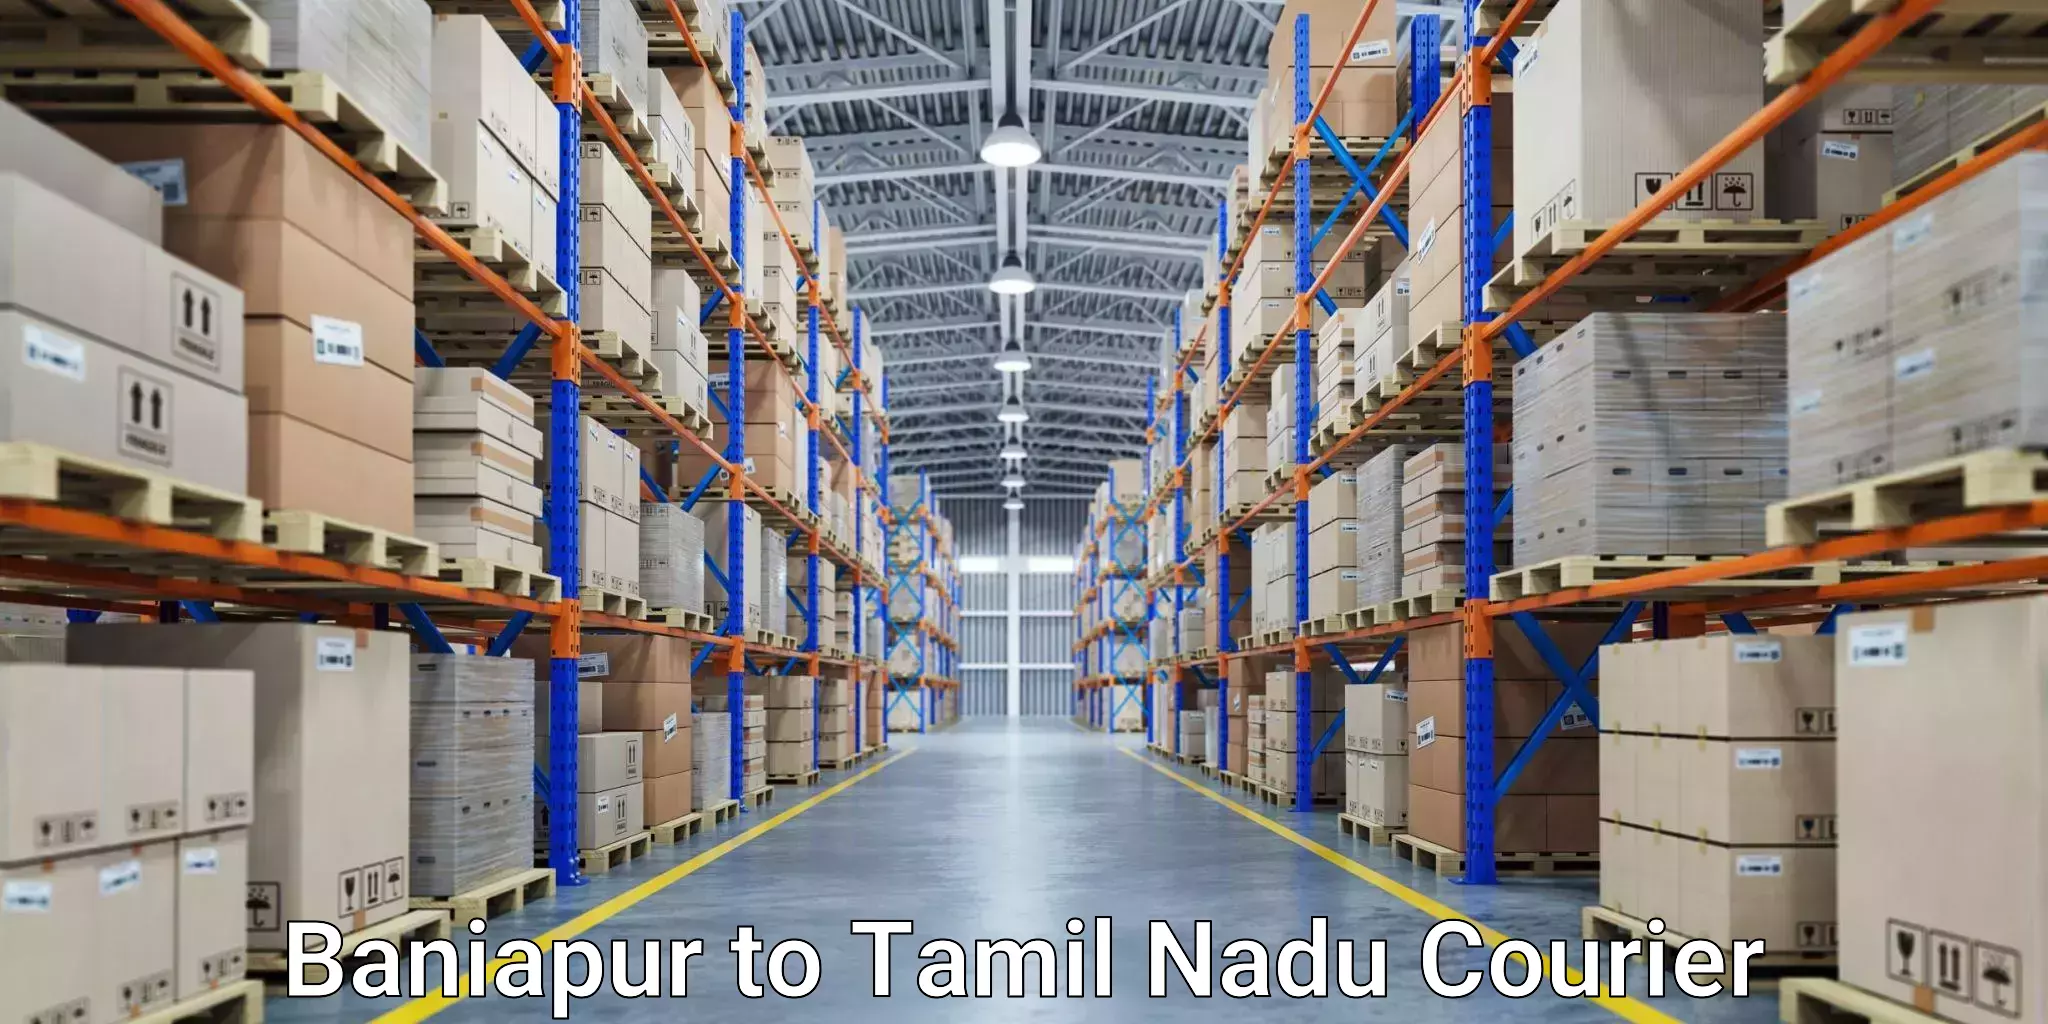 Courier service partnerships Baniapur to Tamil Nadu